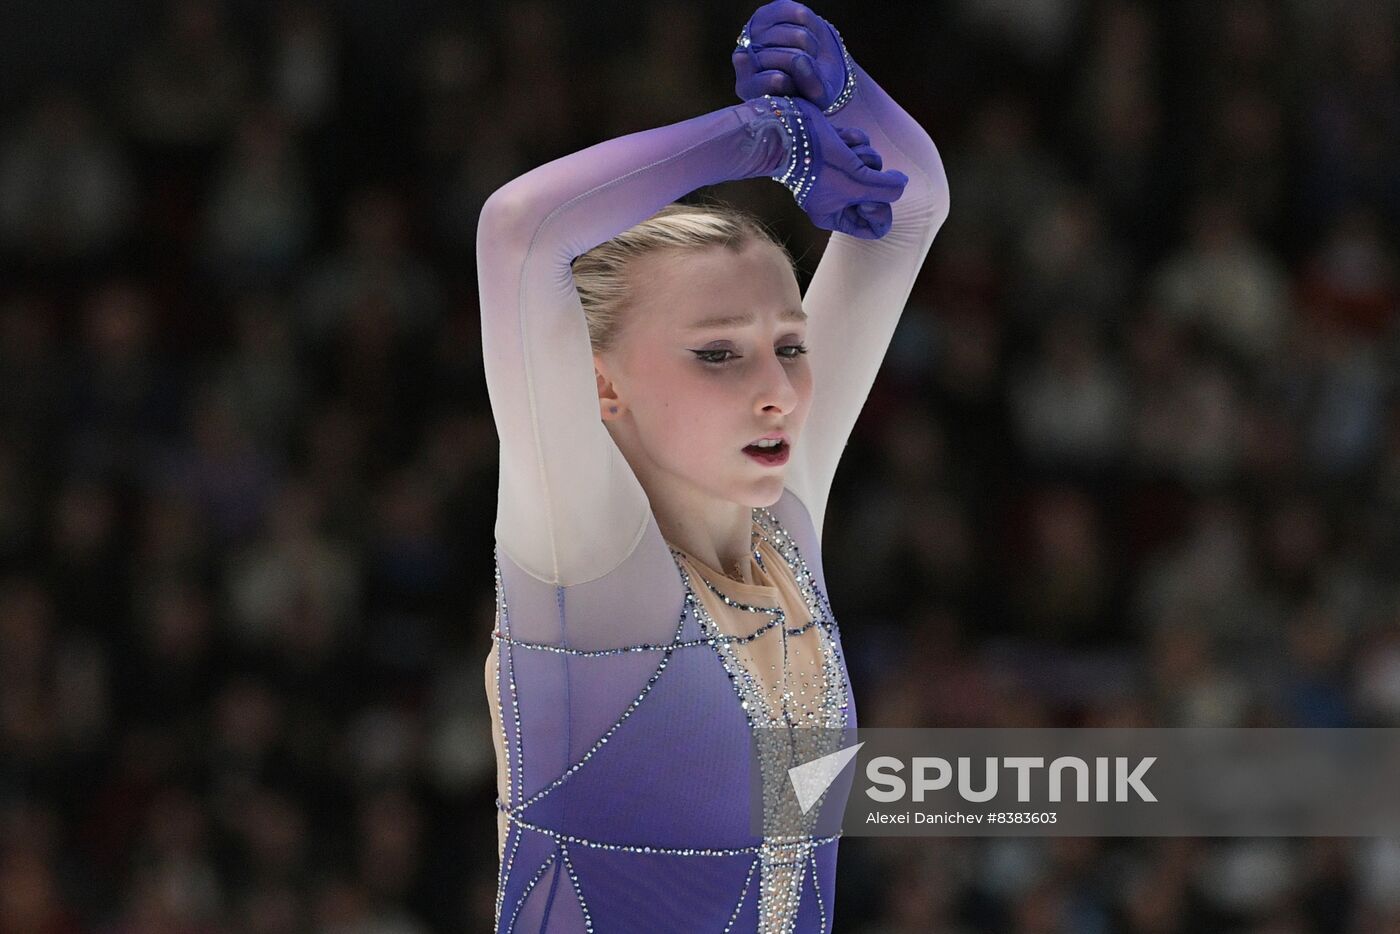 Russia Figure Skating Grand Prix Final Women